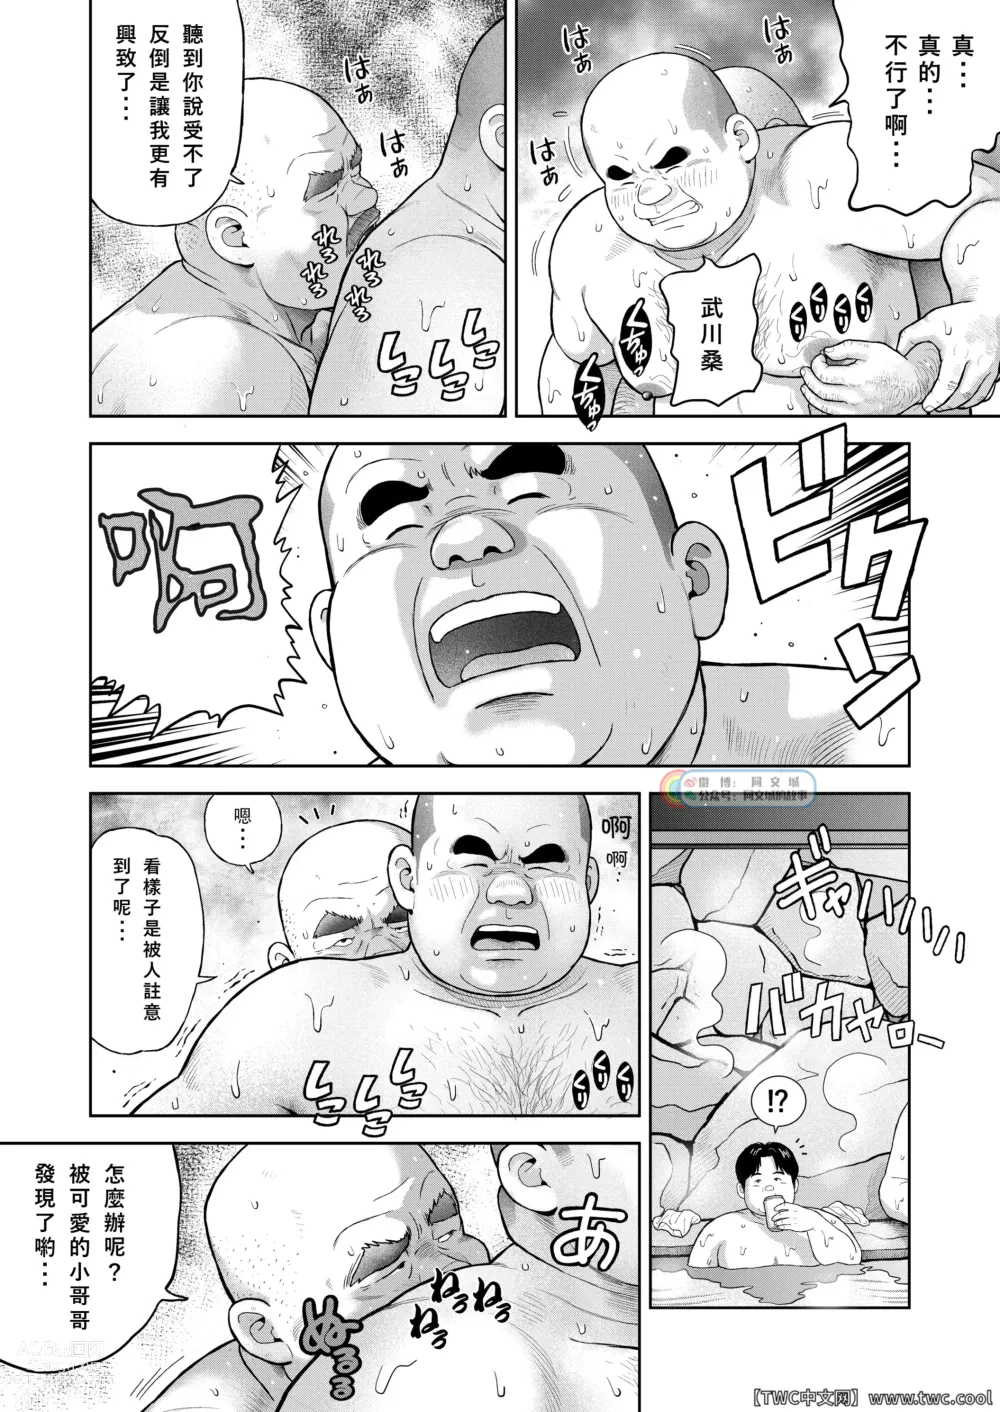 Page 20 of doujinshi Kunoyu Nijyuhatihatsume Sakarujixi